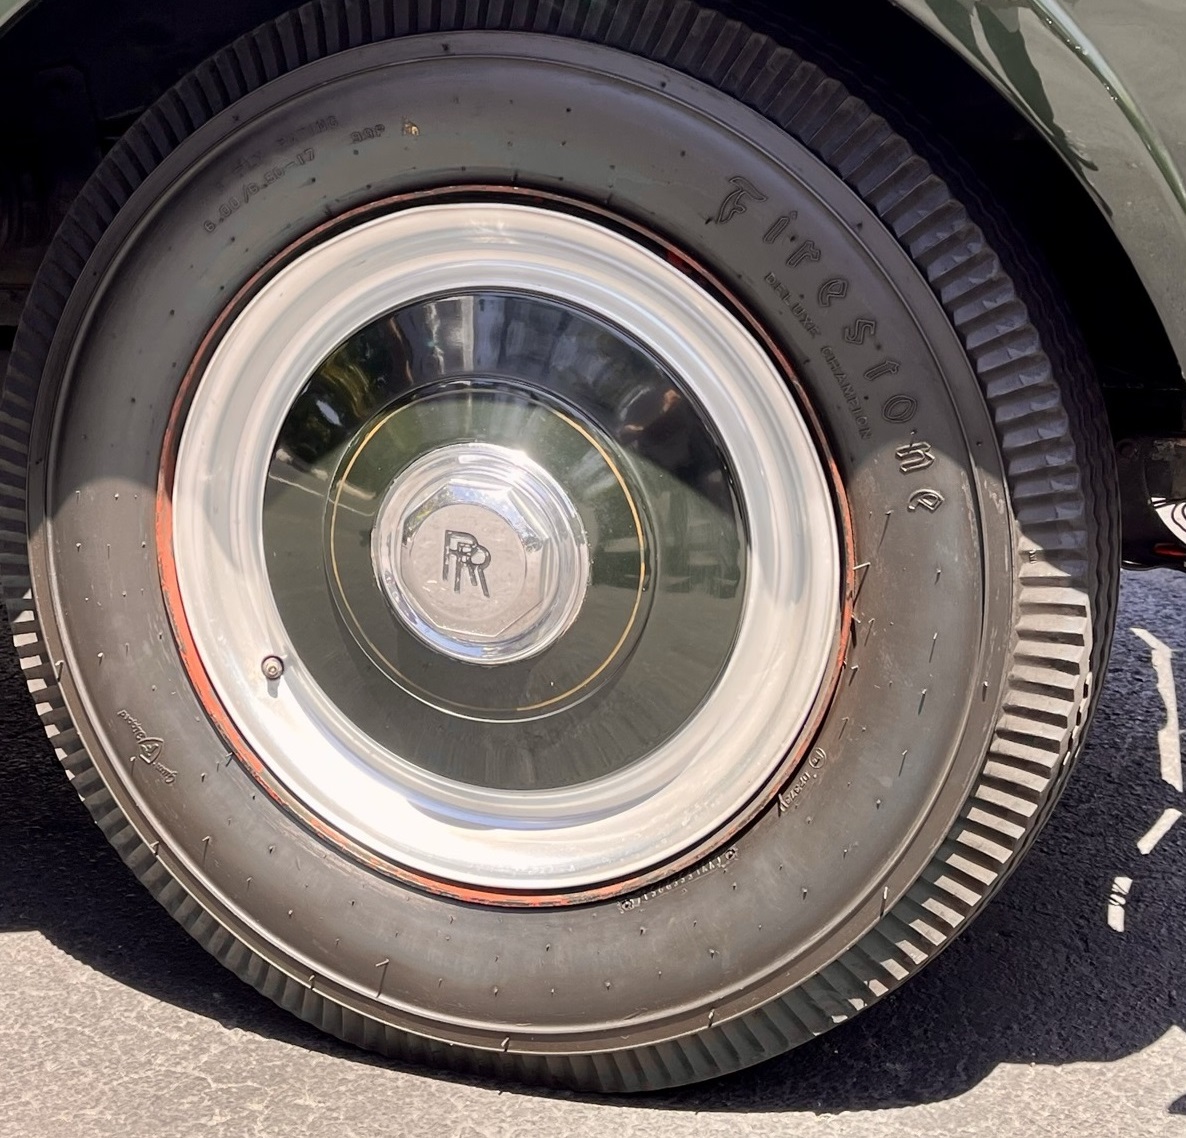 A tire on the 1952 Silver Wraith